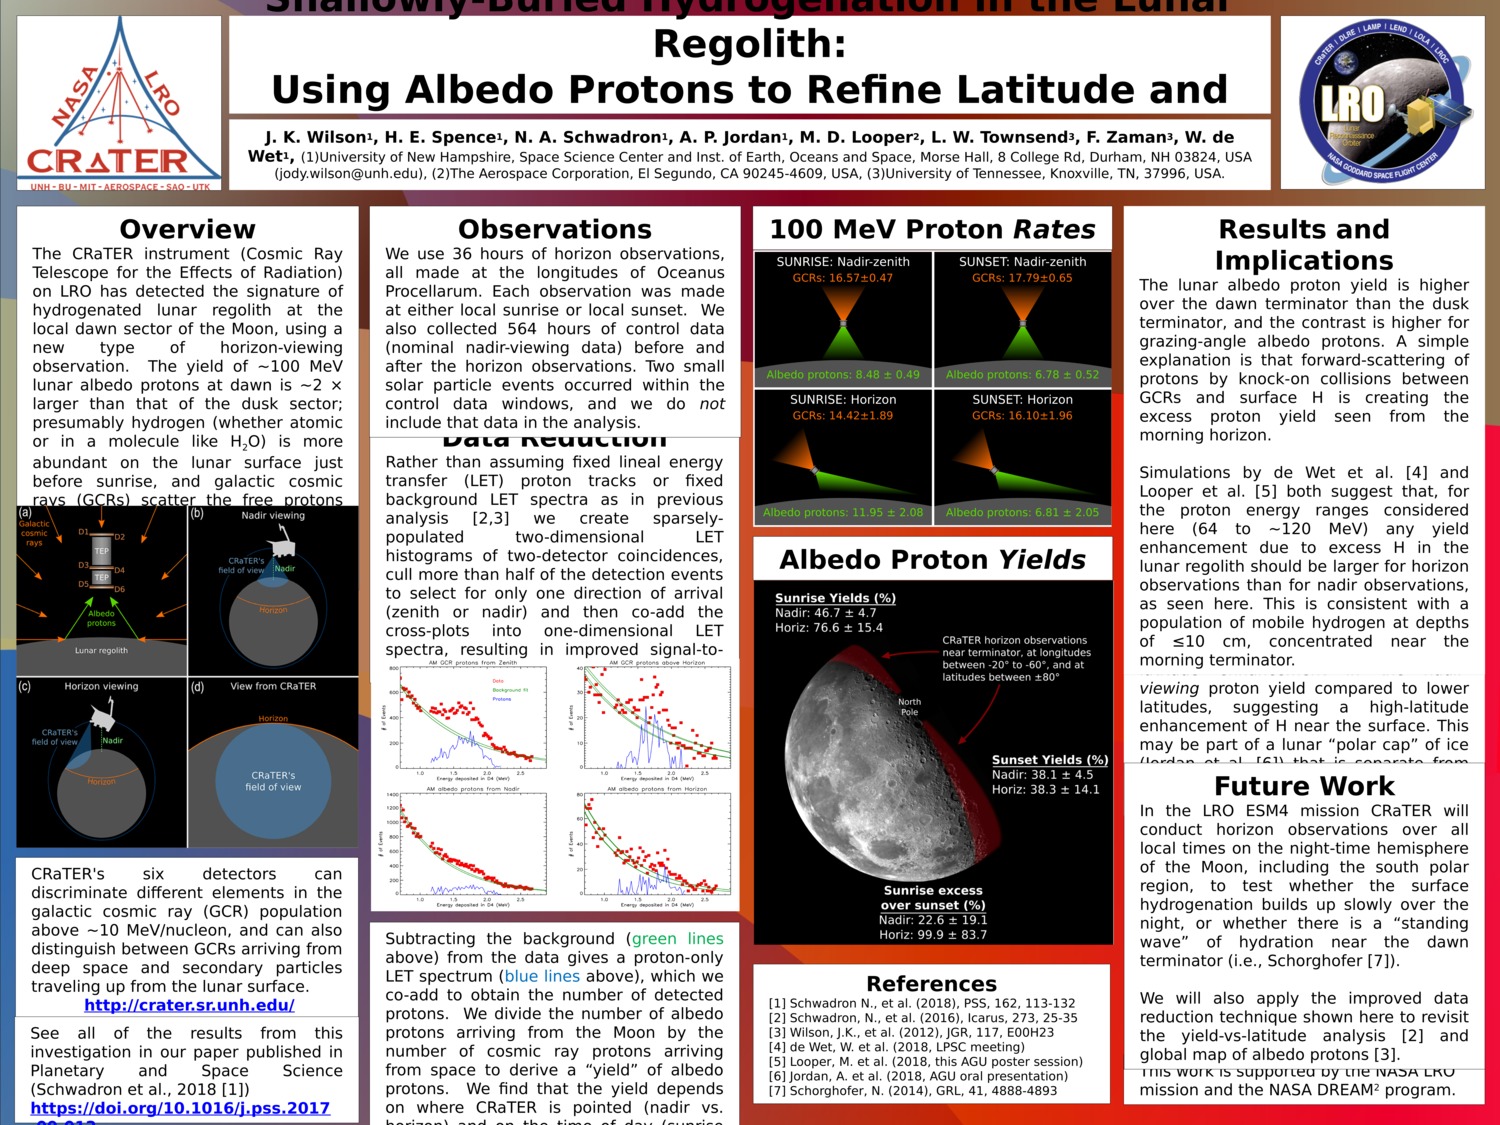 Shallowly-Buried Hydrogenation In The Lunar Regolith:Using Albedo Protons To Refine Latitude And Local Time Trends by jkwilson